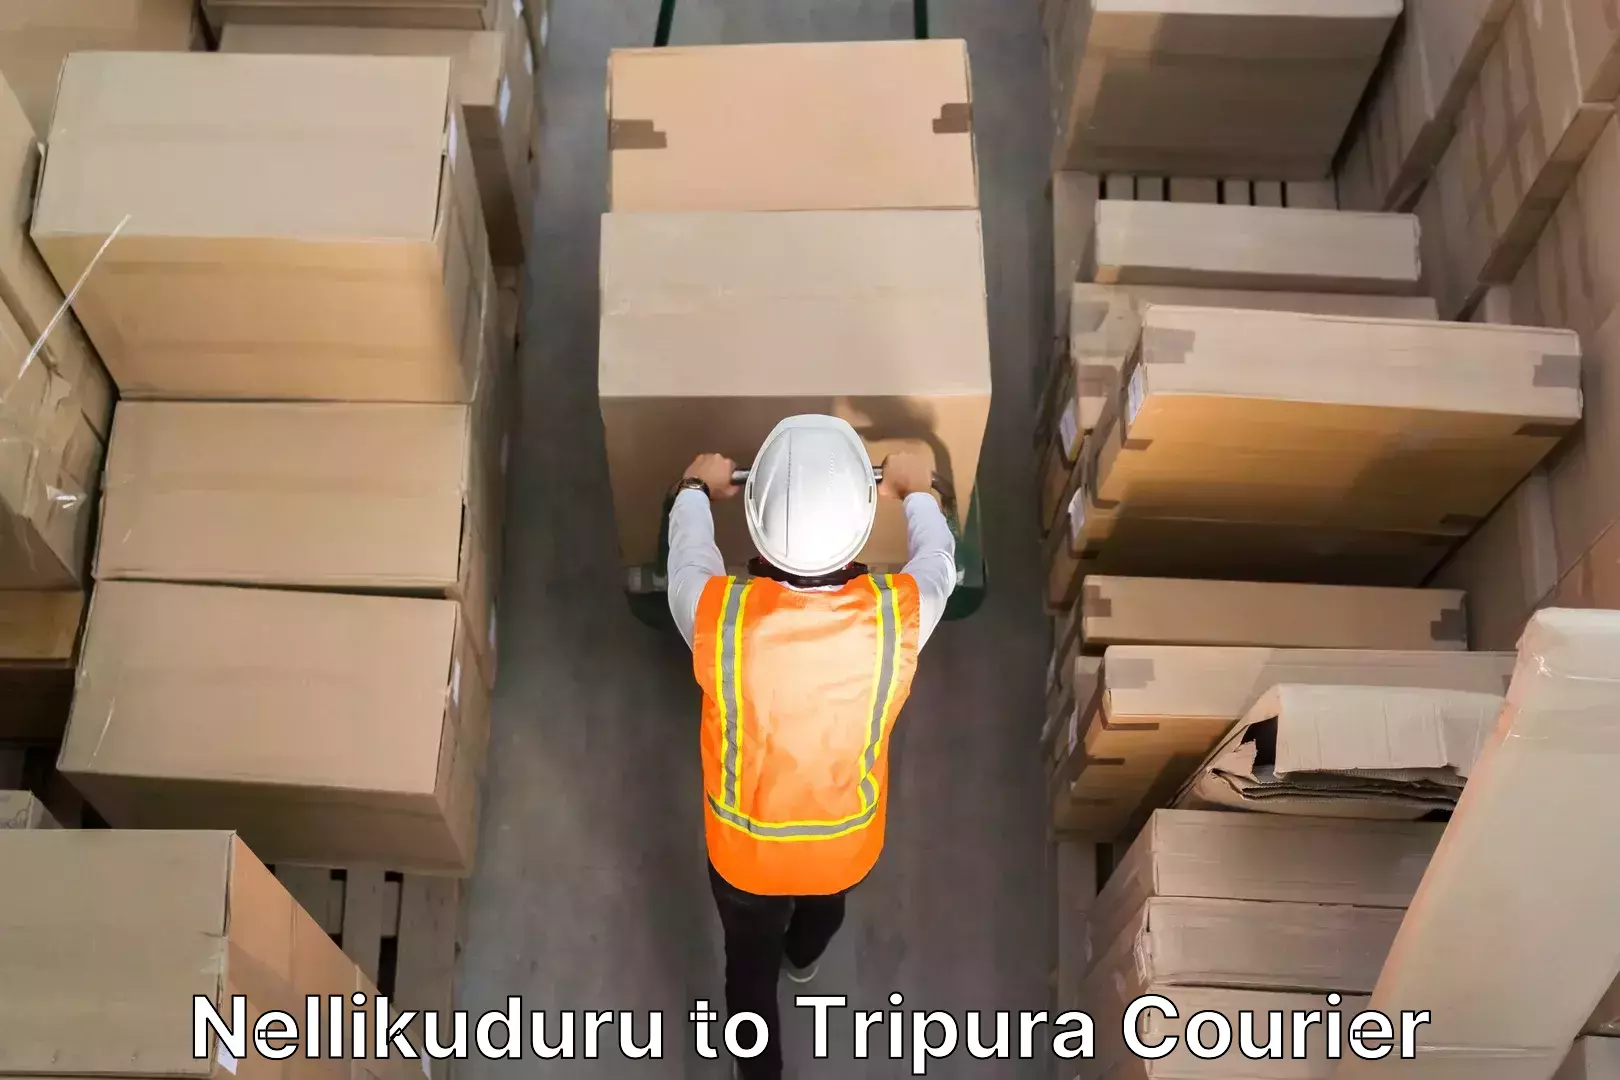 Skilled furniture transporters Nellikuduru to Tripura